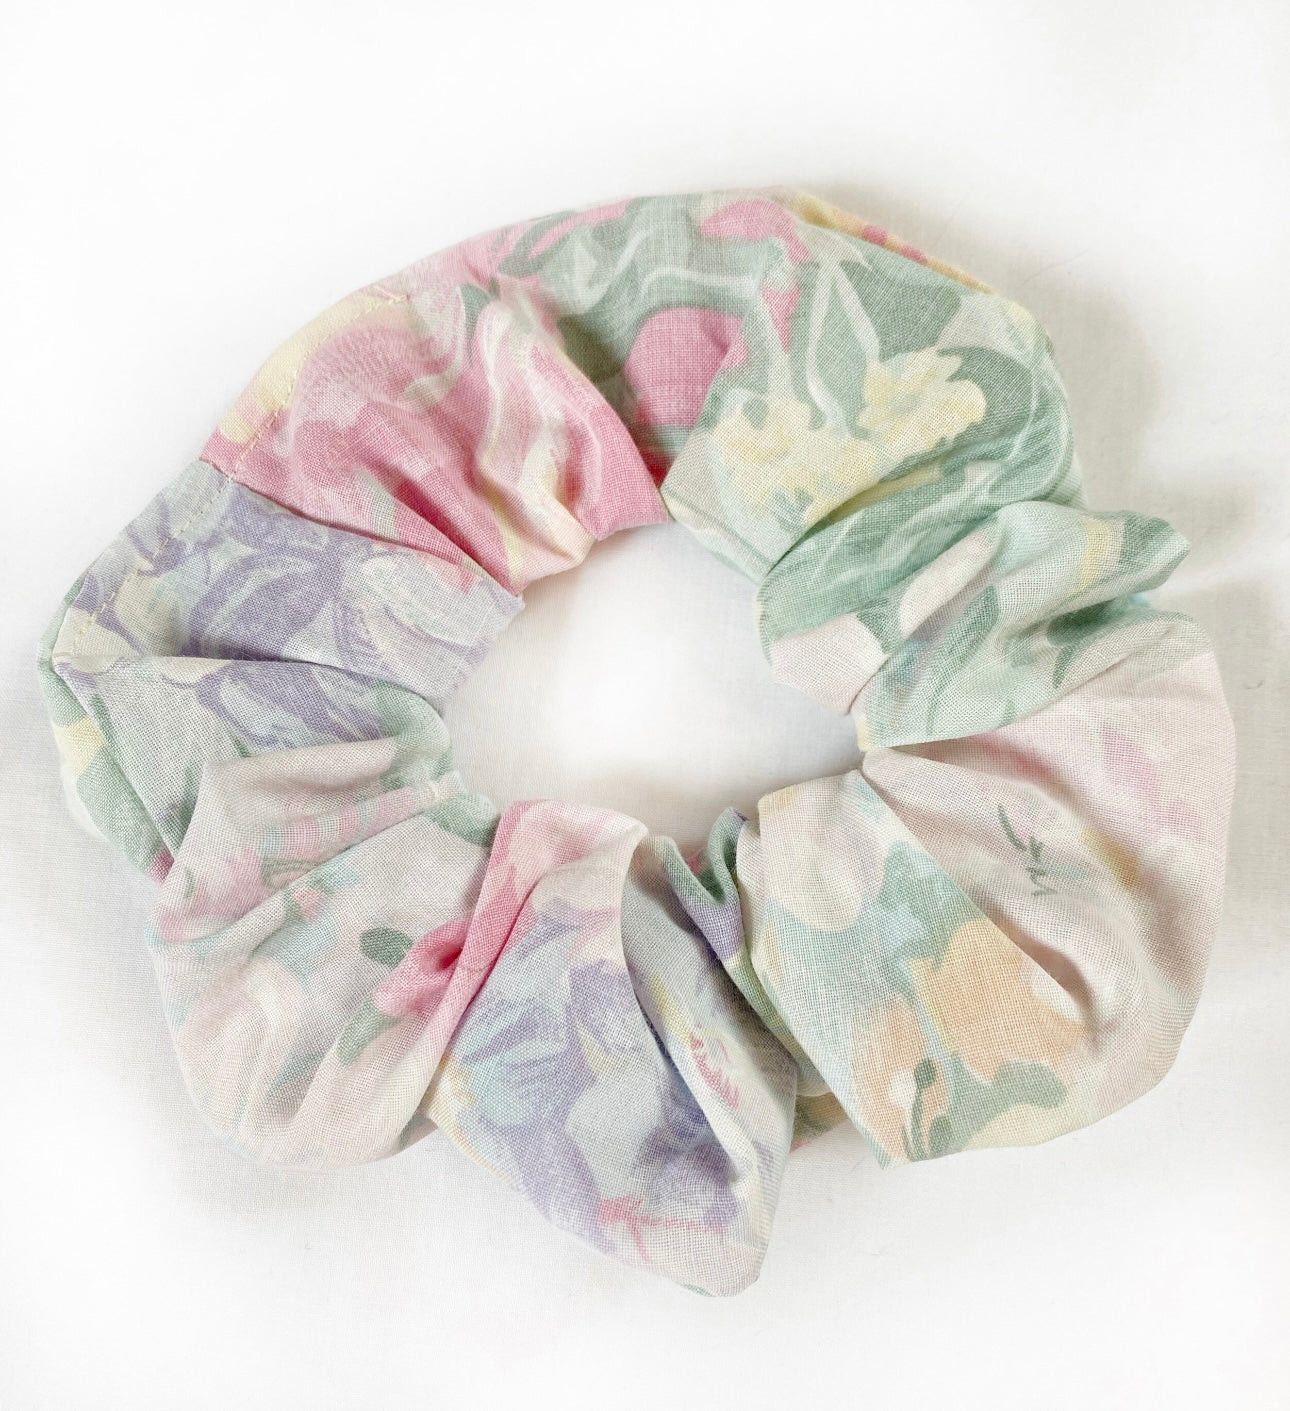 Oversized Scrunchie in Pastel Floral